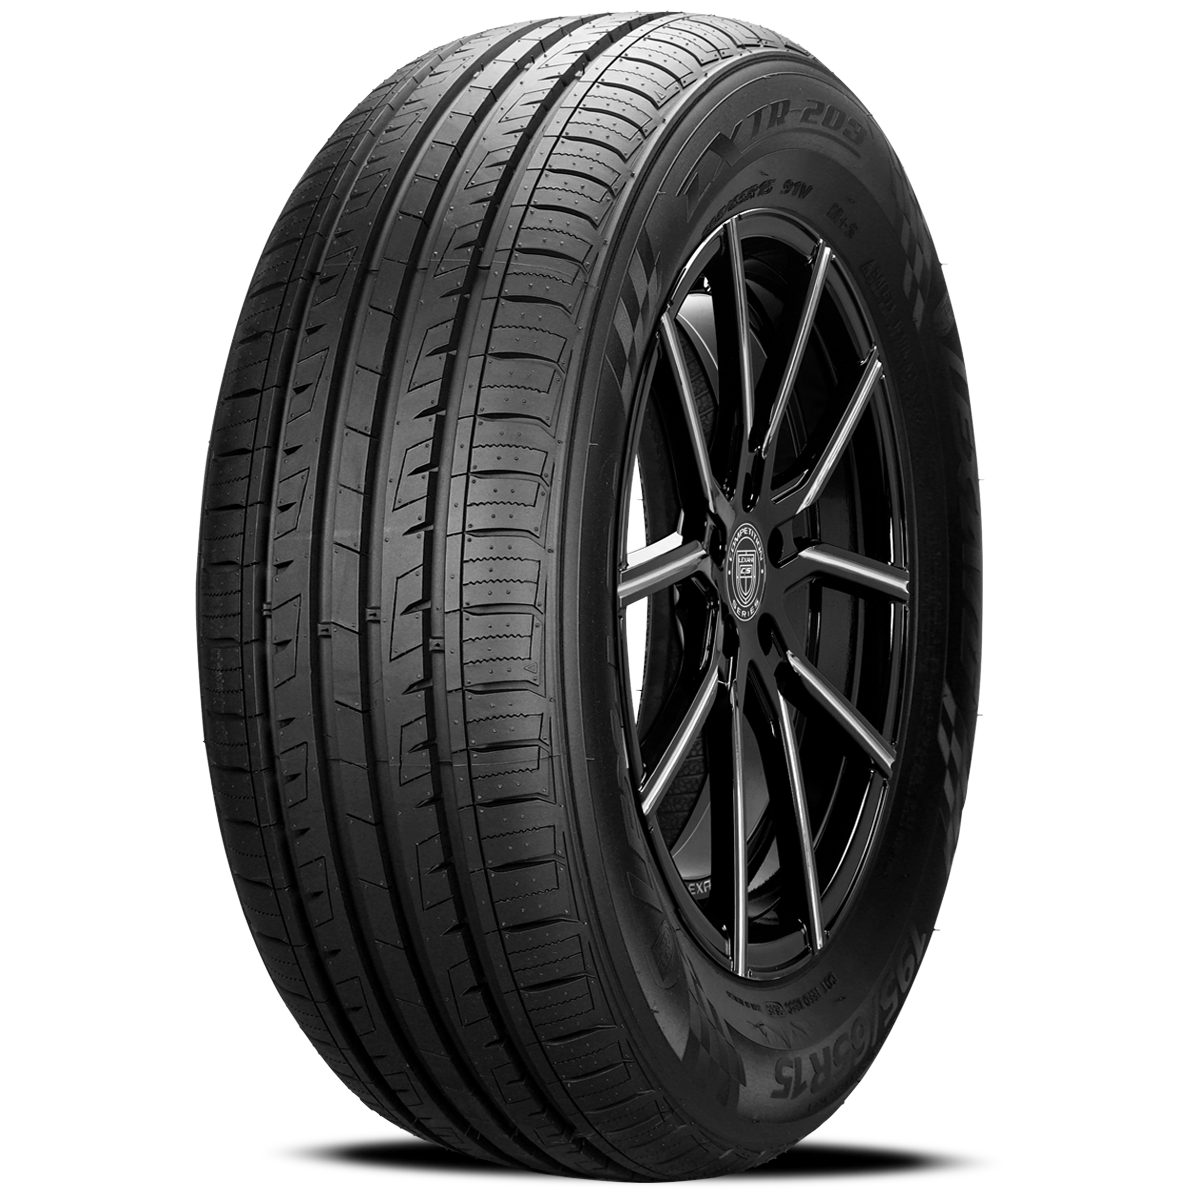 LEXANI LXTR-203 225/60R16 (26.6X8.9R 16) Tires